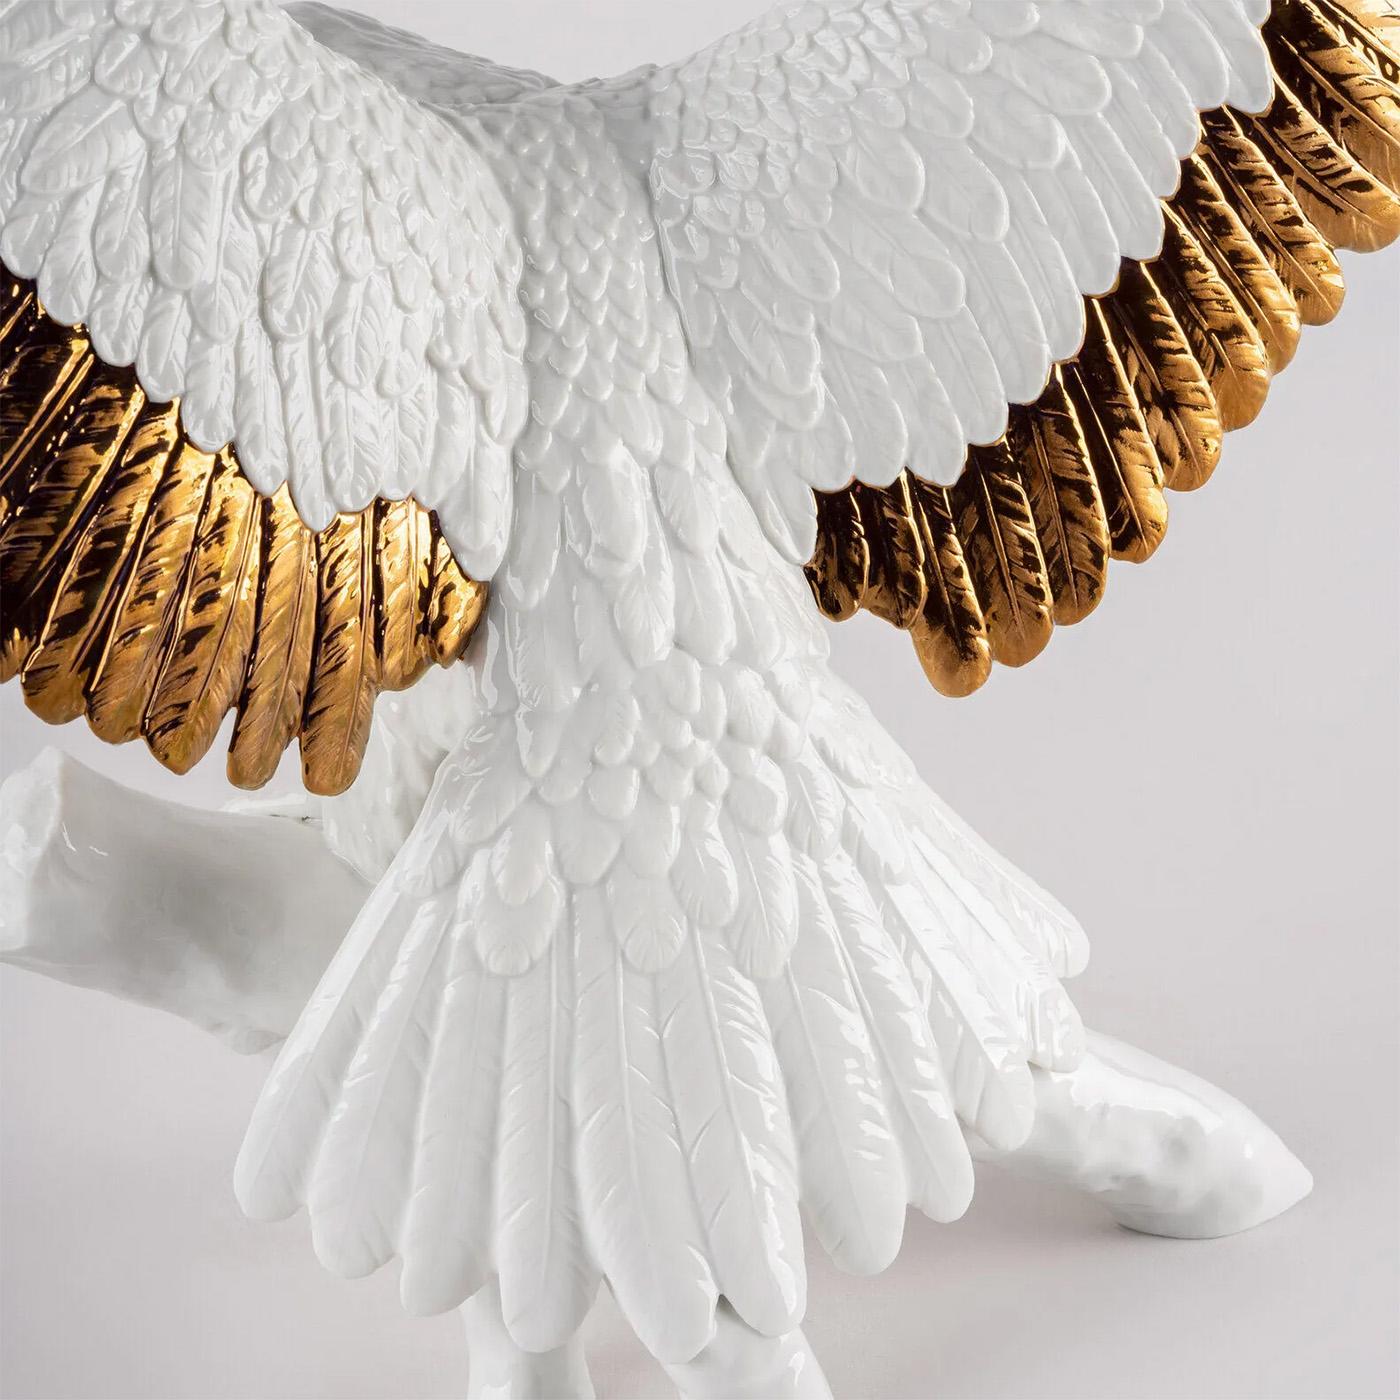 Glazed White Eagle Sculpture For Sale